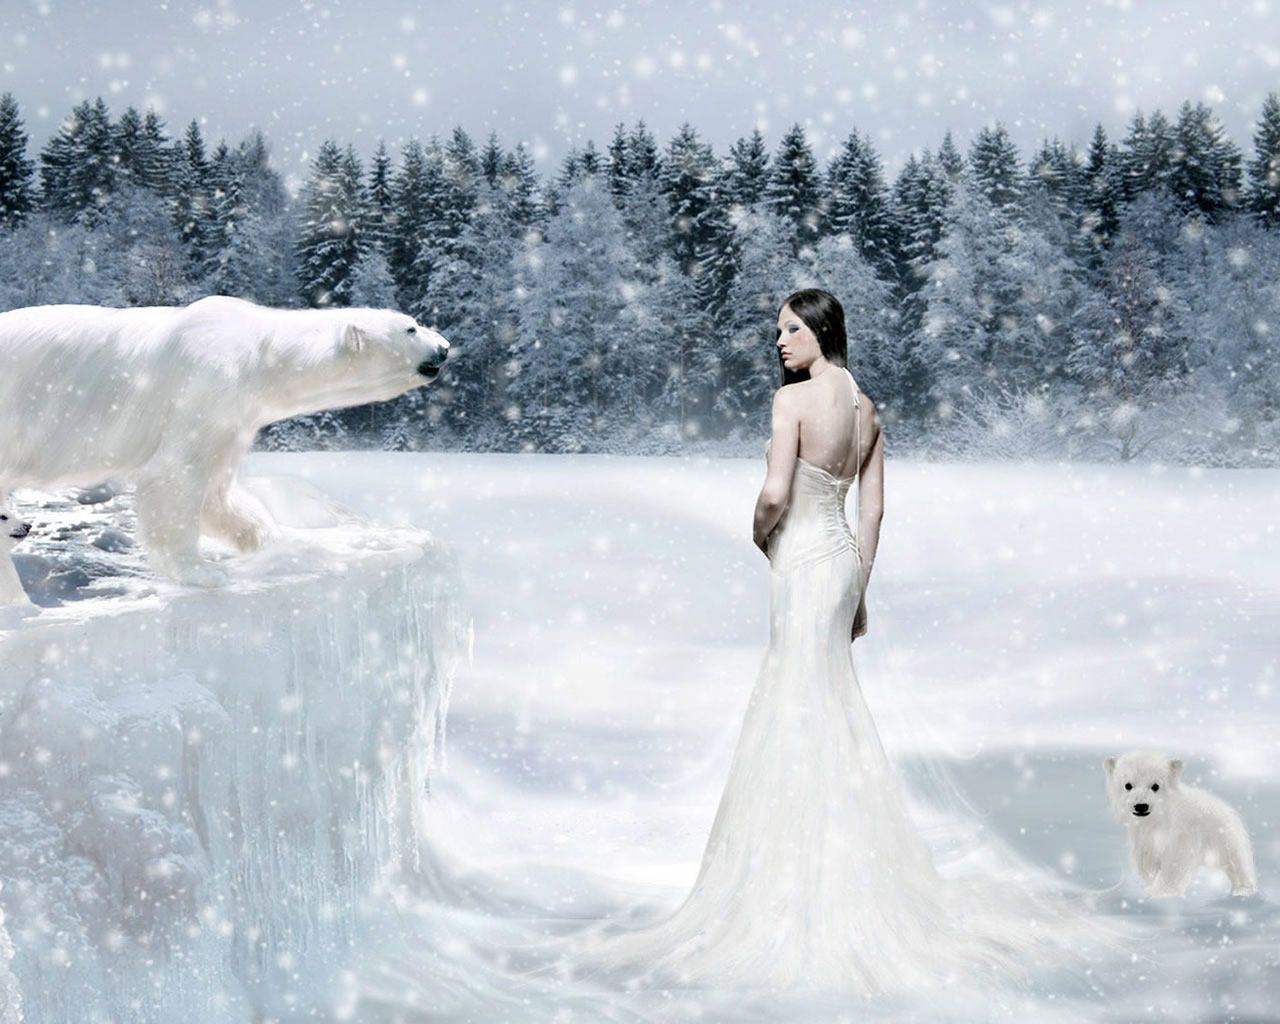 polar princess, Woman of the Winter wallpaper.com. Bear art, Polar bear, Snow animals